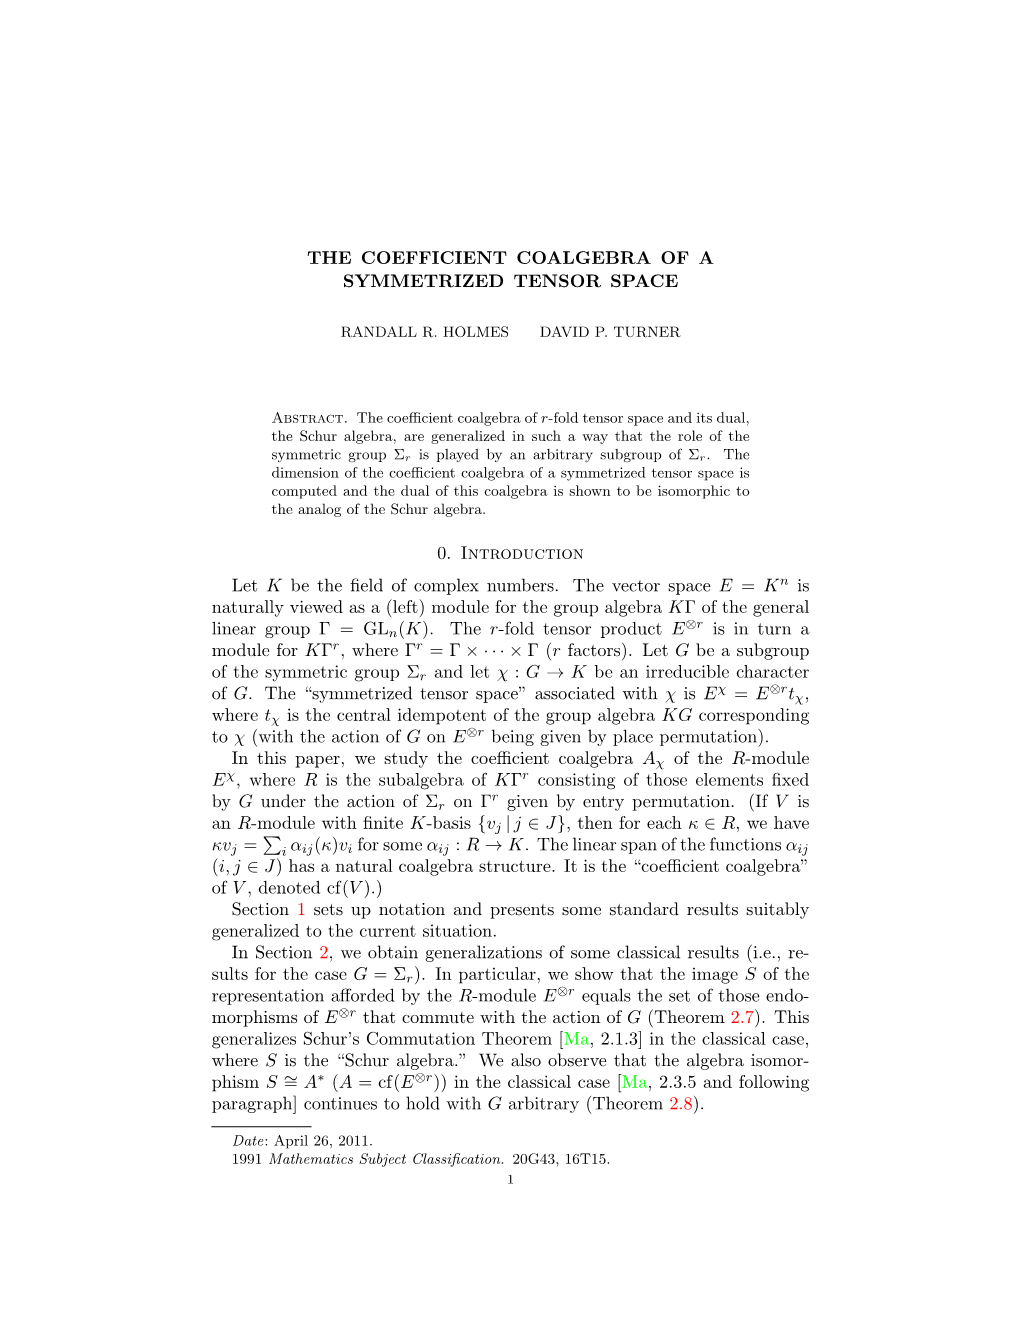 The Coefficient Coalgebra of a Symmetrized Tensor Space